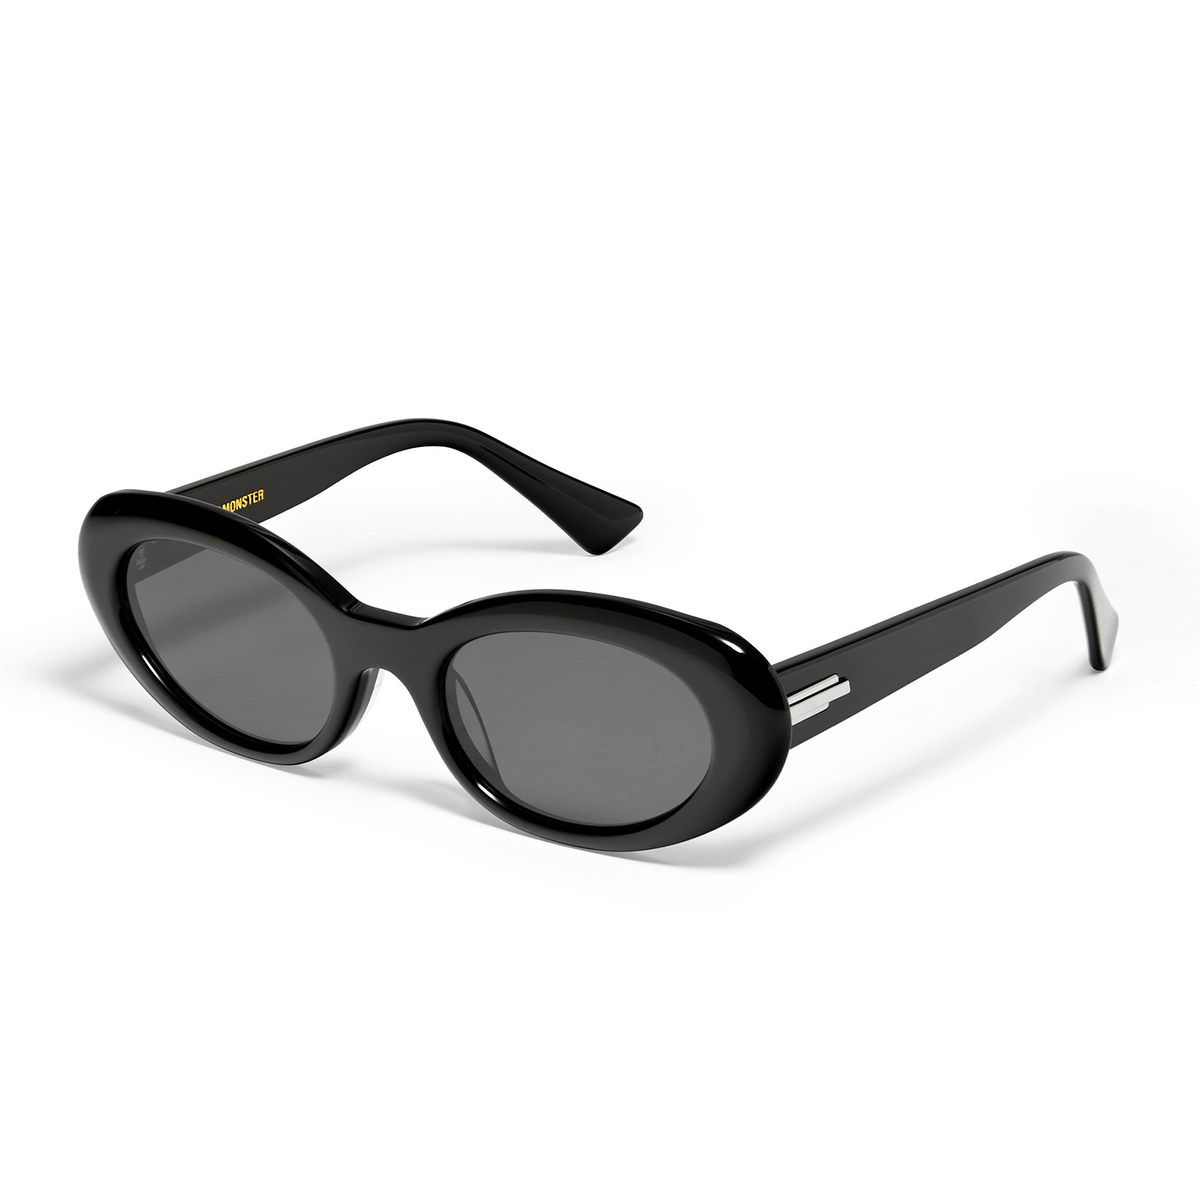 Gentle Monster® Cat-eye Sunglasses: Le color Black 01 - three-quarters view.